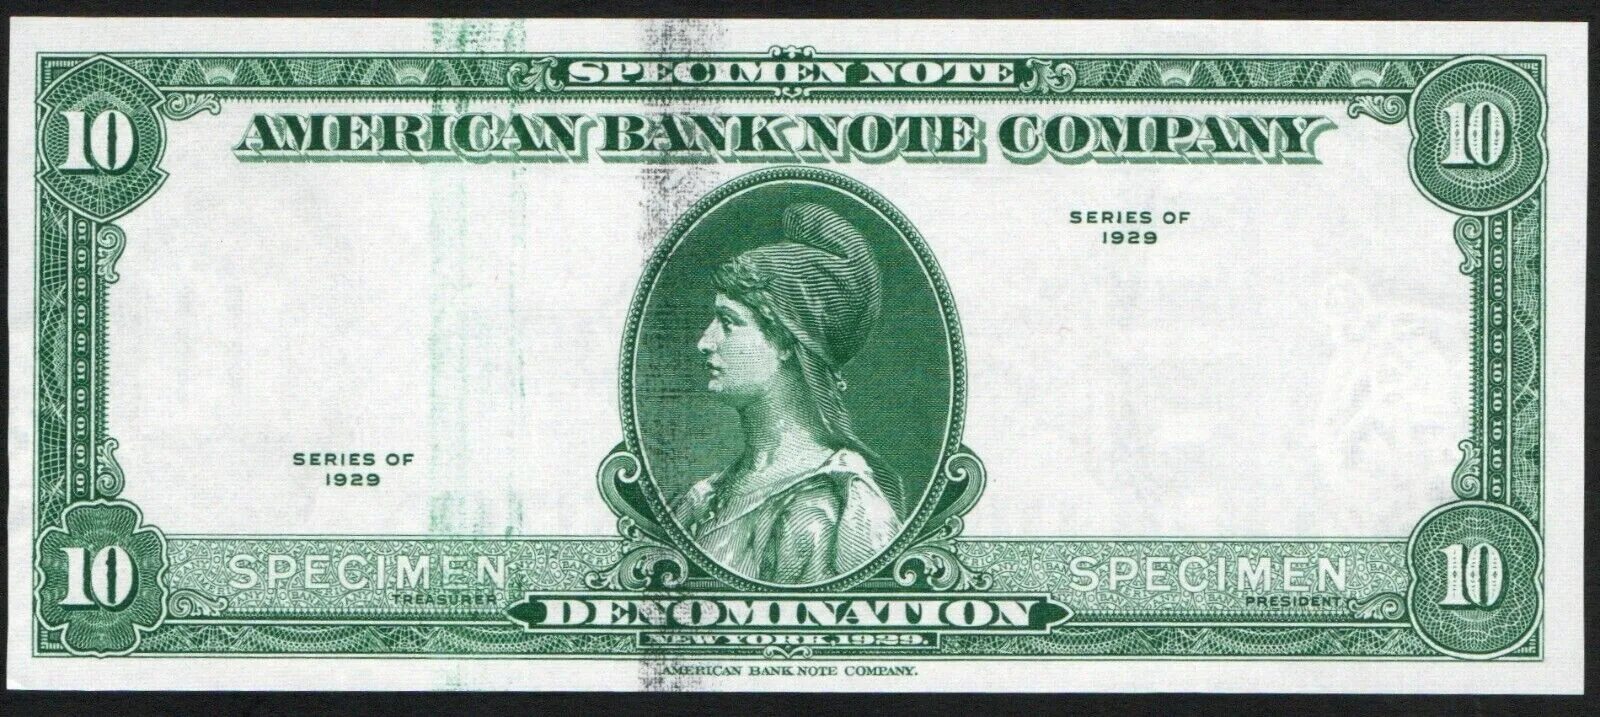 T me bank notes. Тестовая банкнота. Купюра организации. Доллар 1929. Водяные знаки 1 доллара.